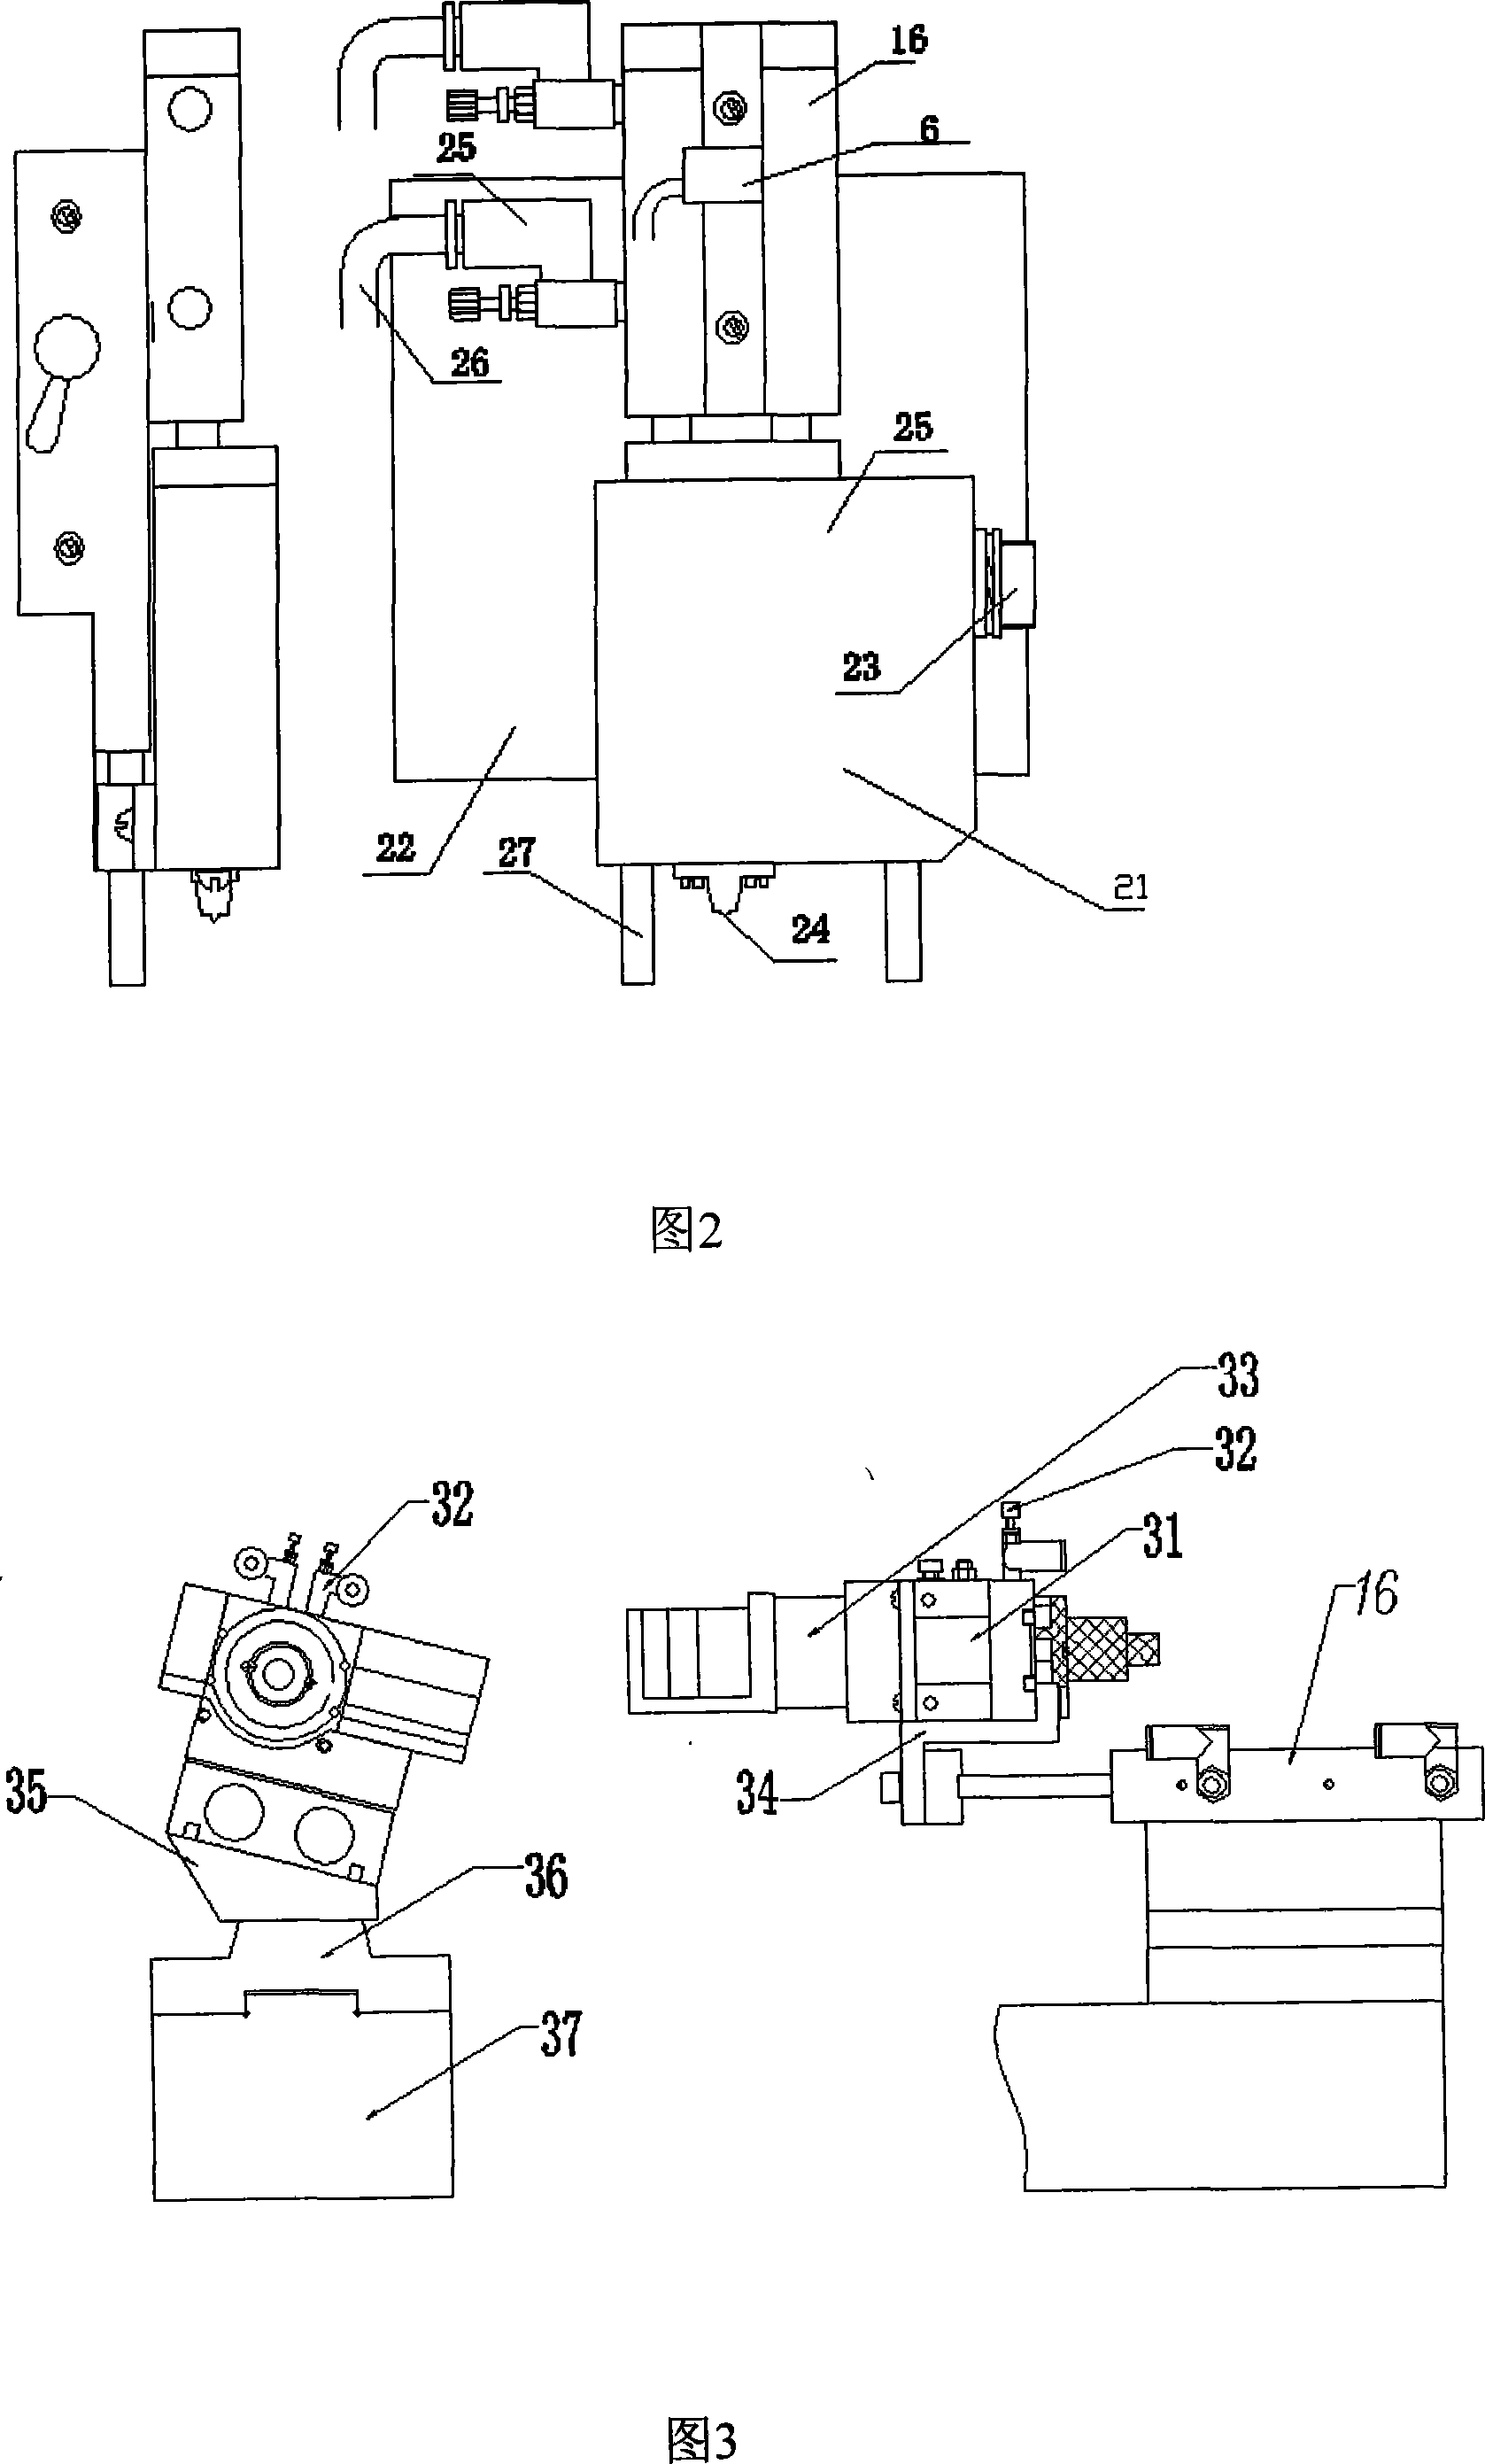 Full-automatic bearing vibration survey instrument and method thereof